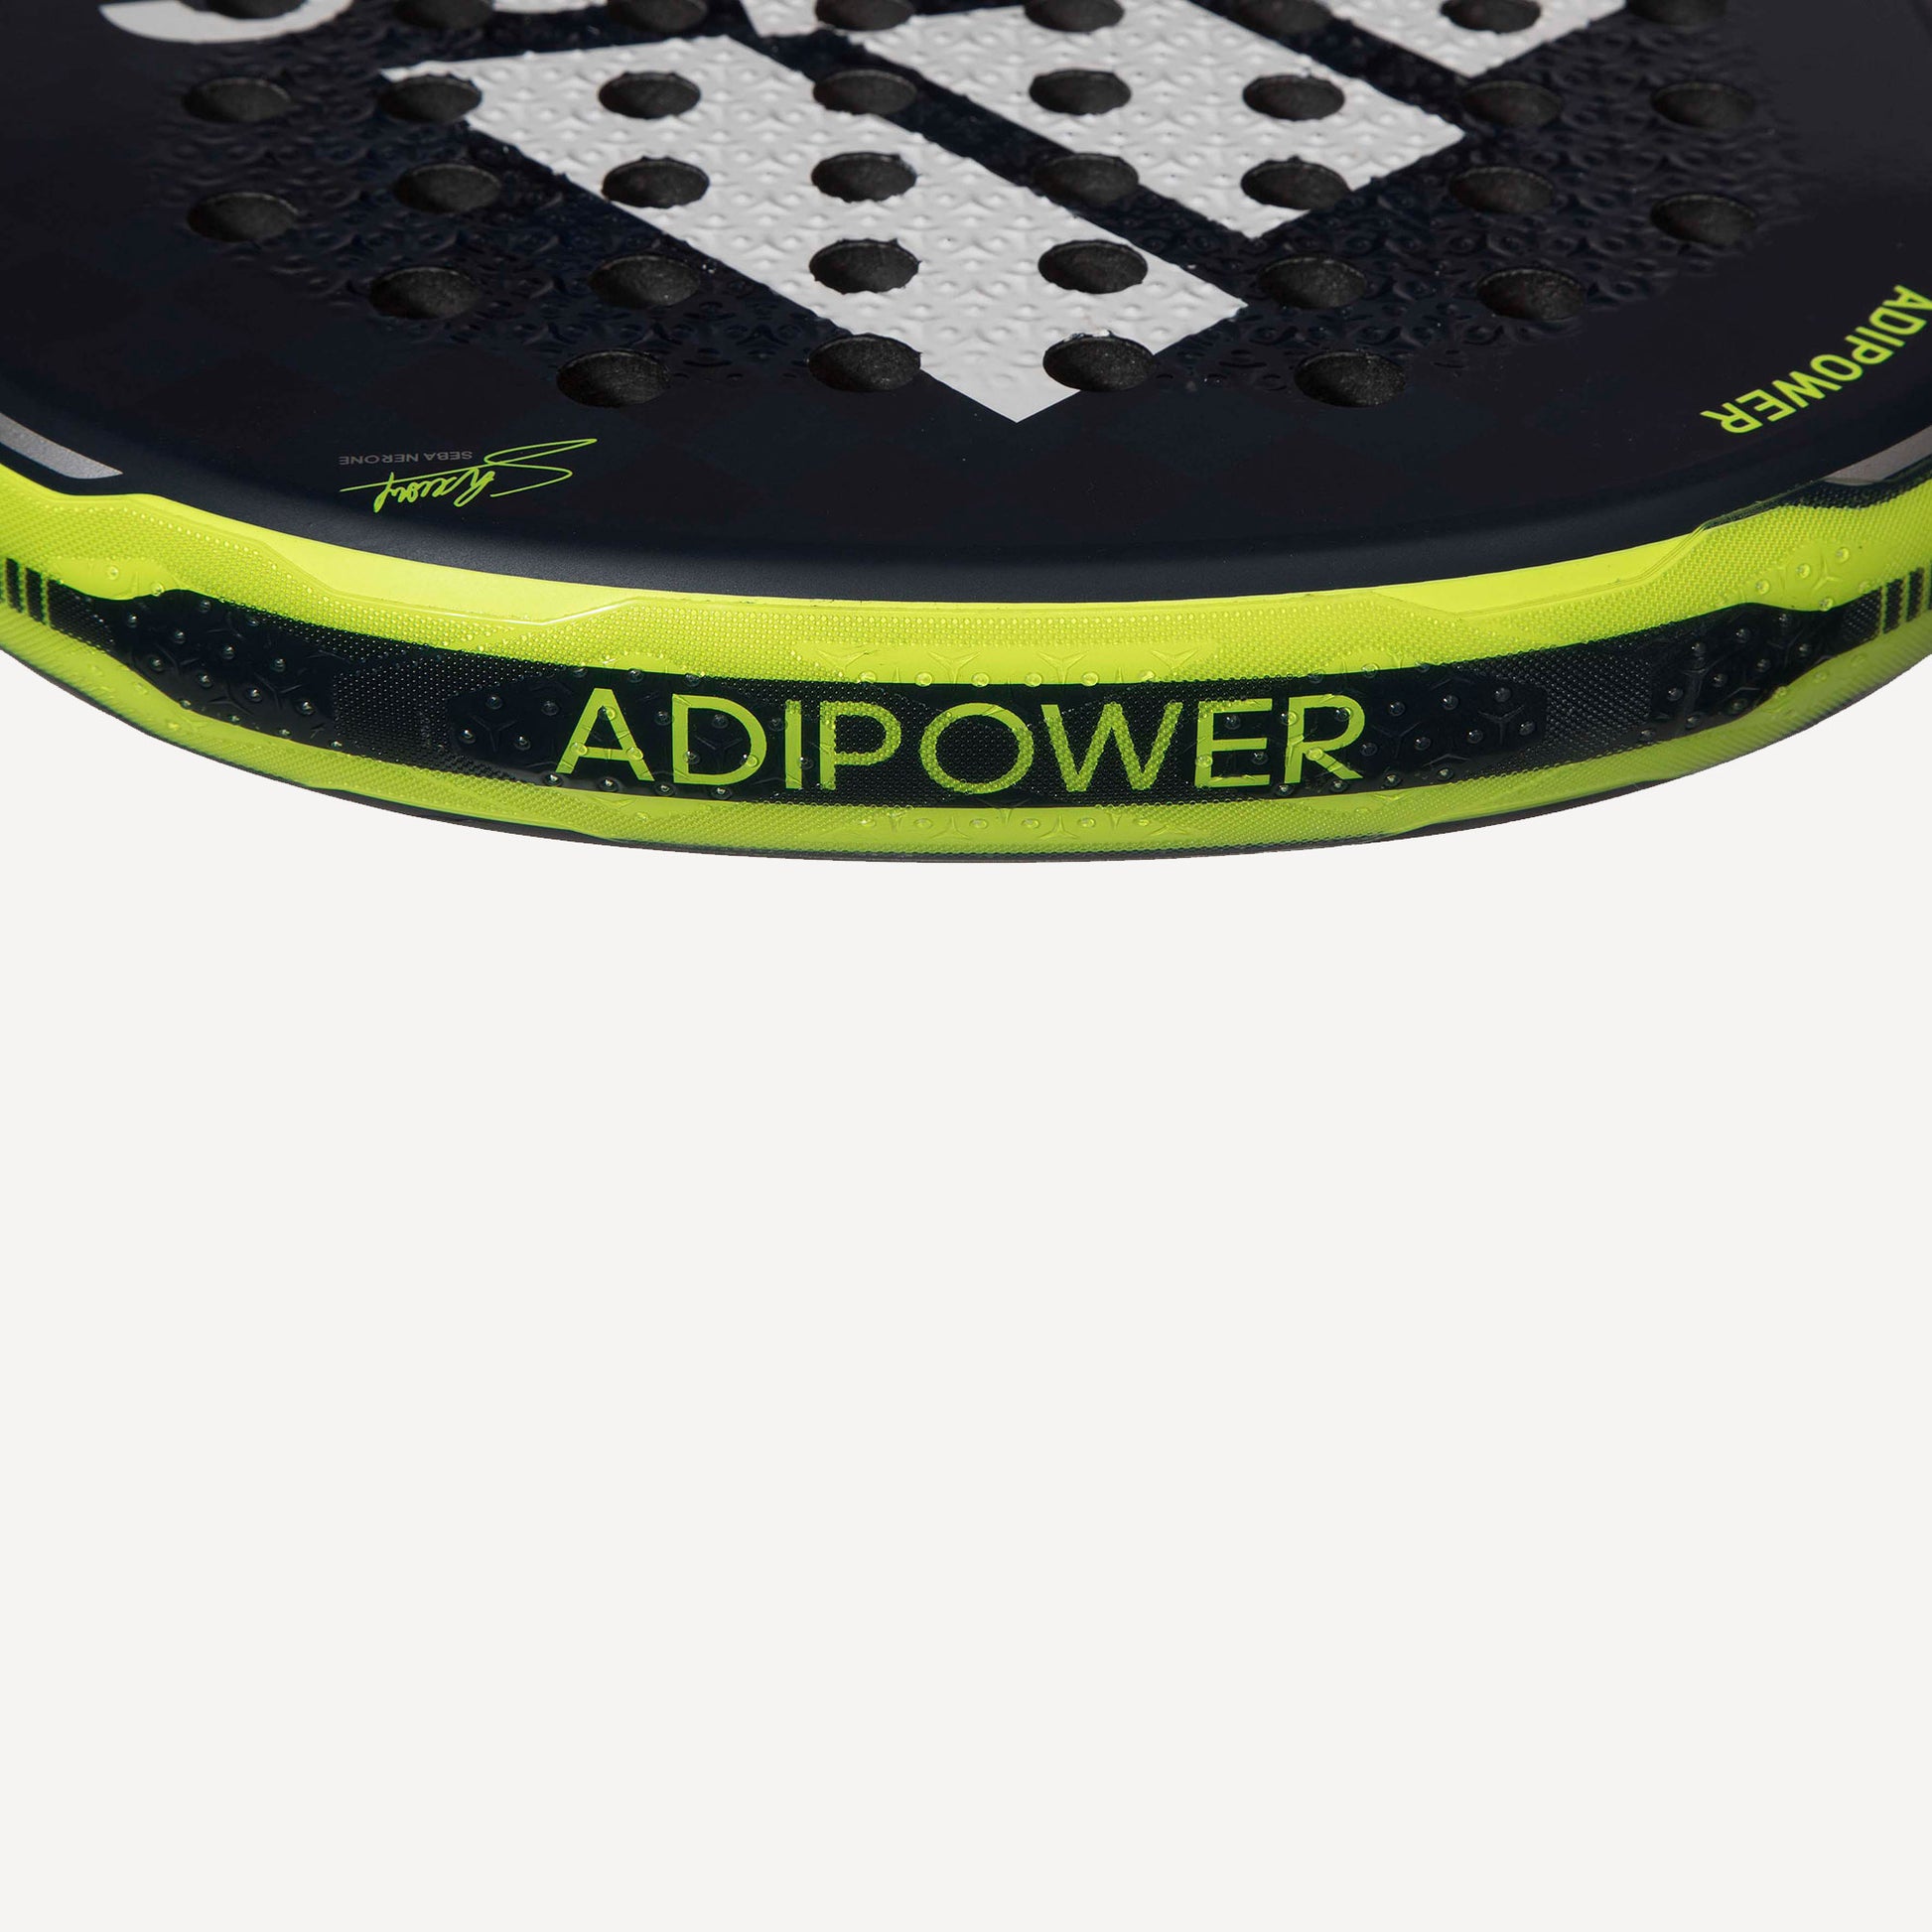 adidas adipower 3.1 Padel Racket 5